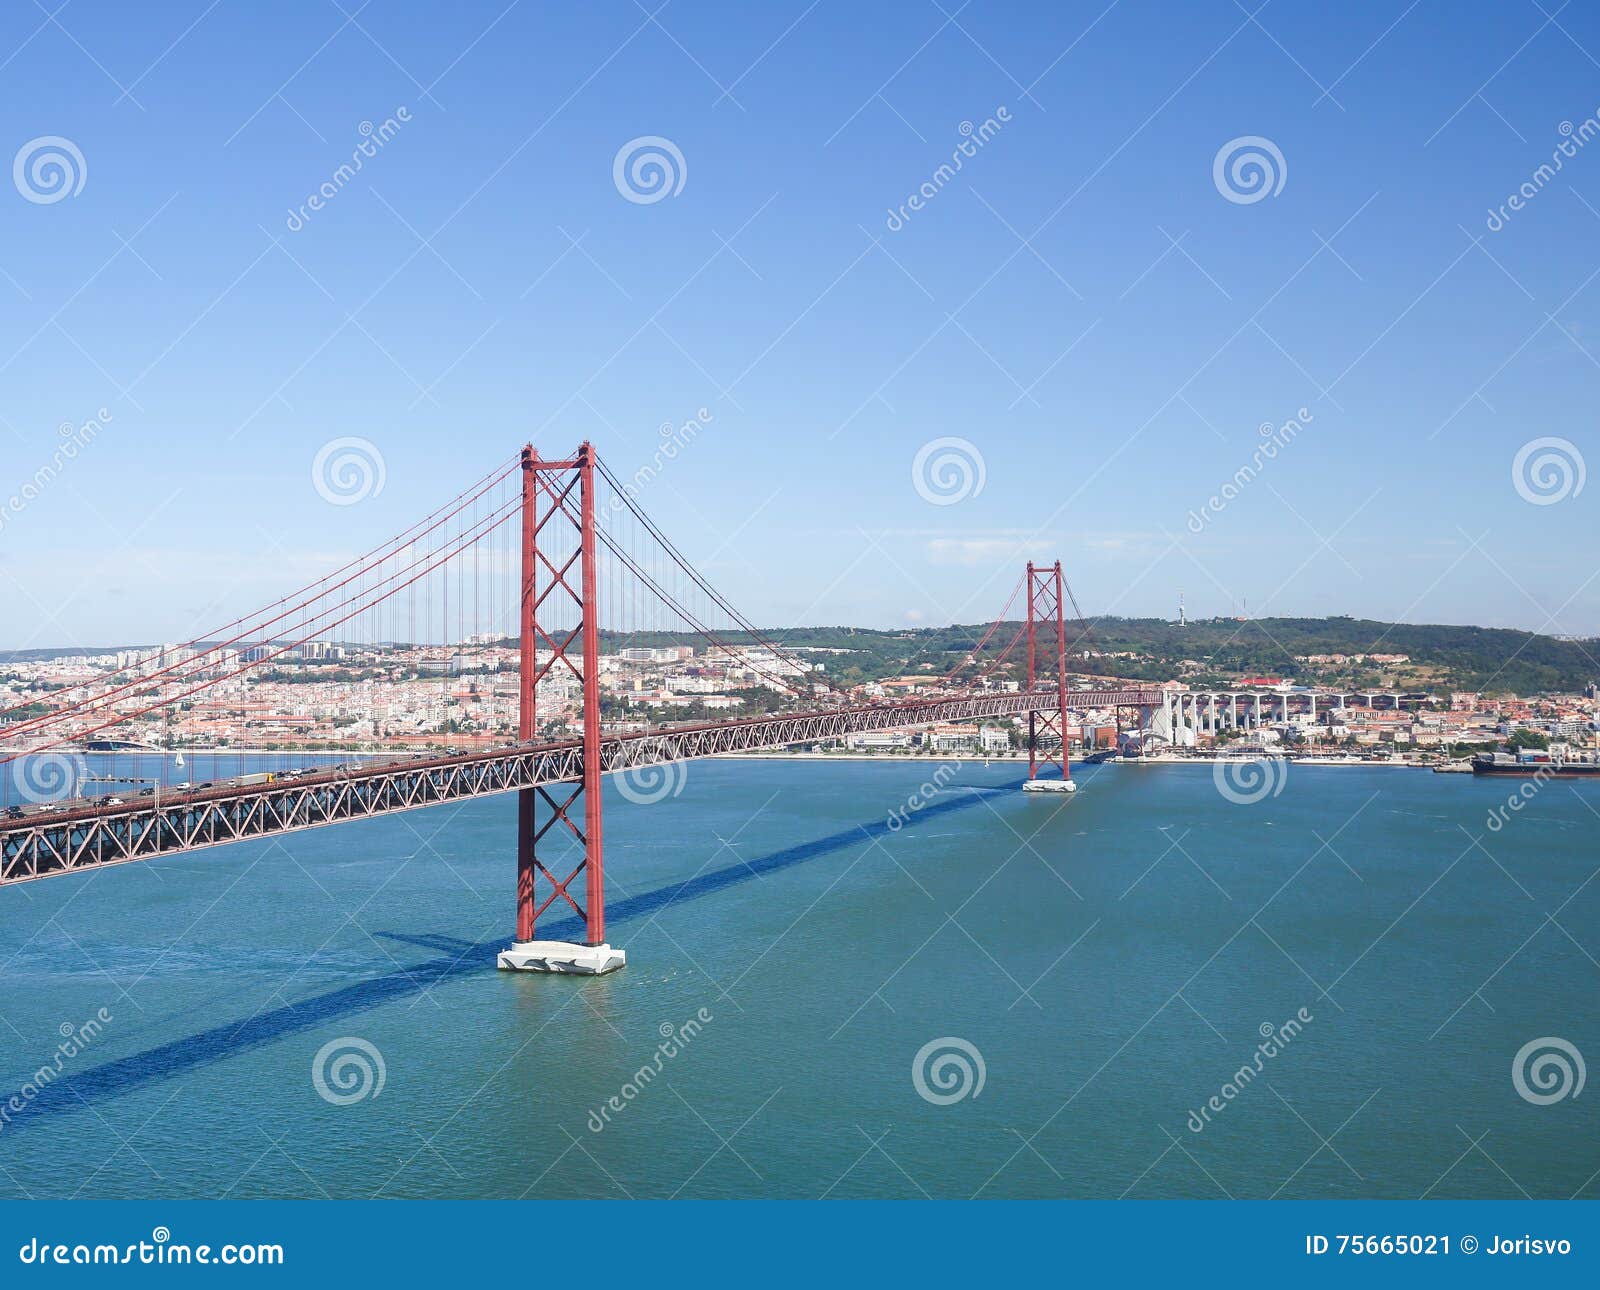 ponte 25 de abril in lisbon, portugal